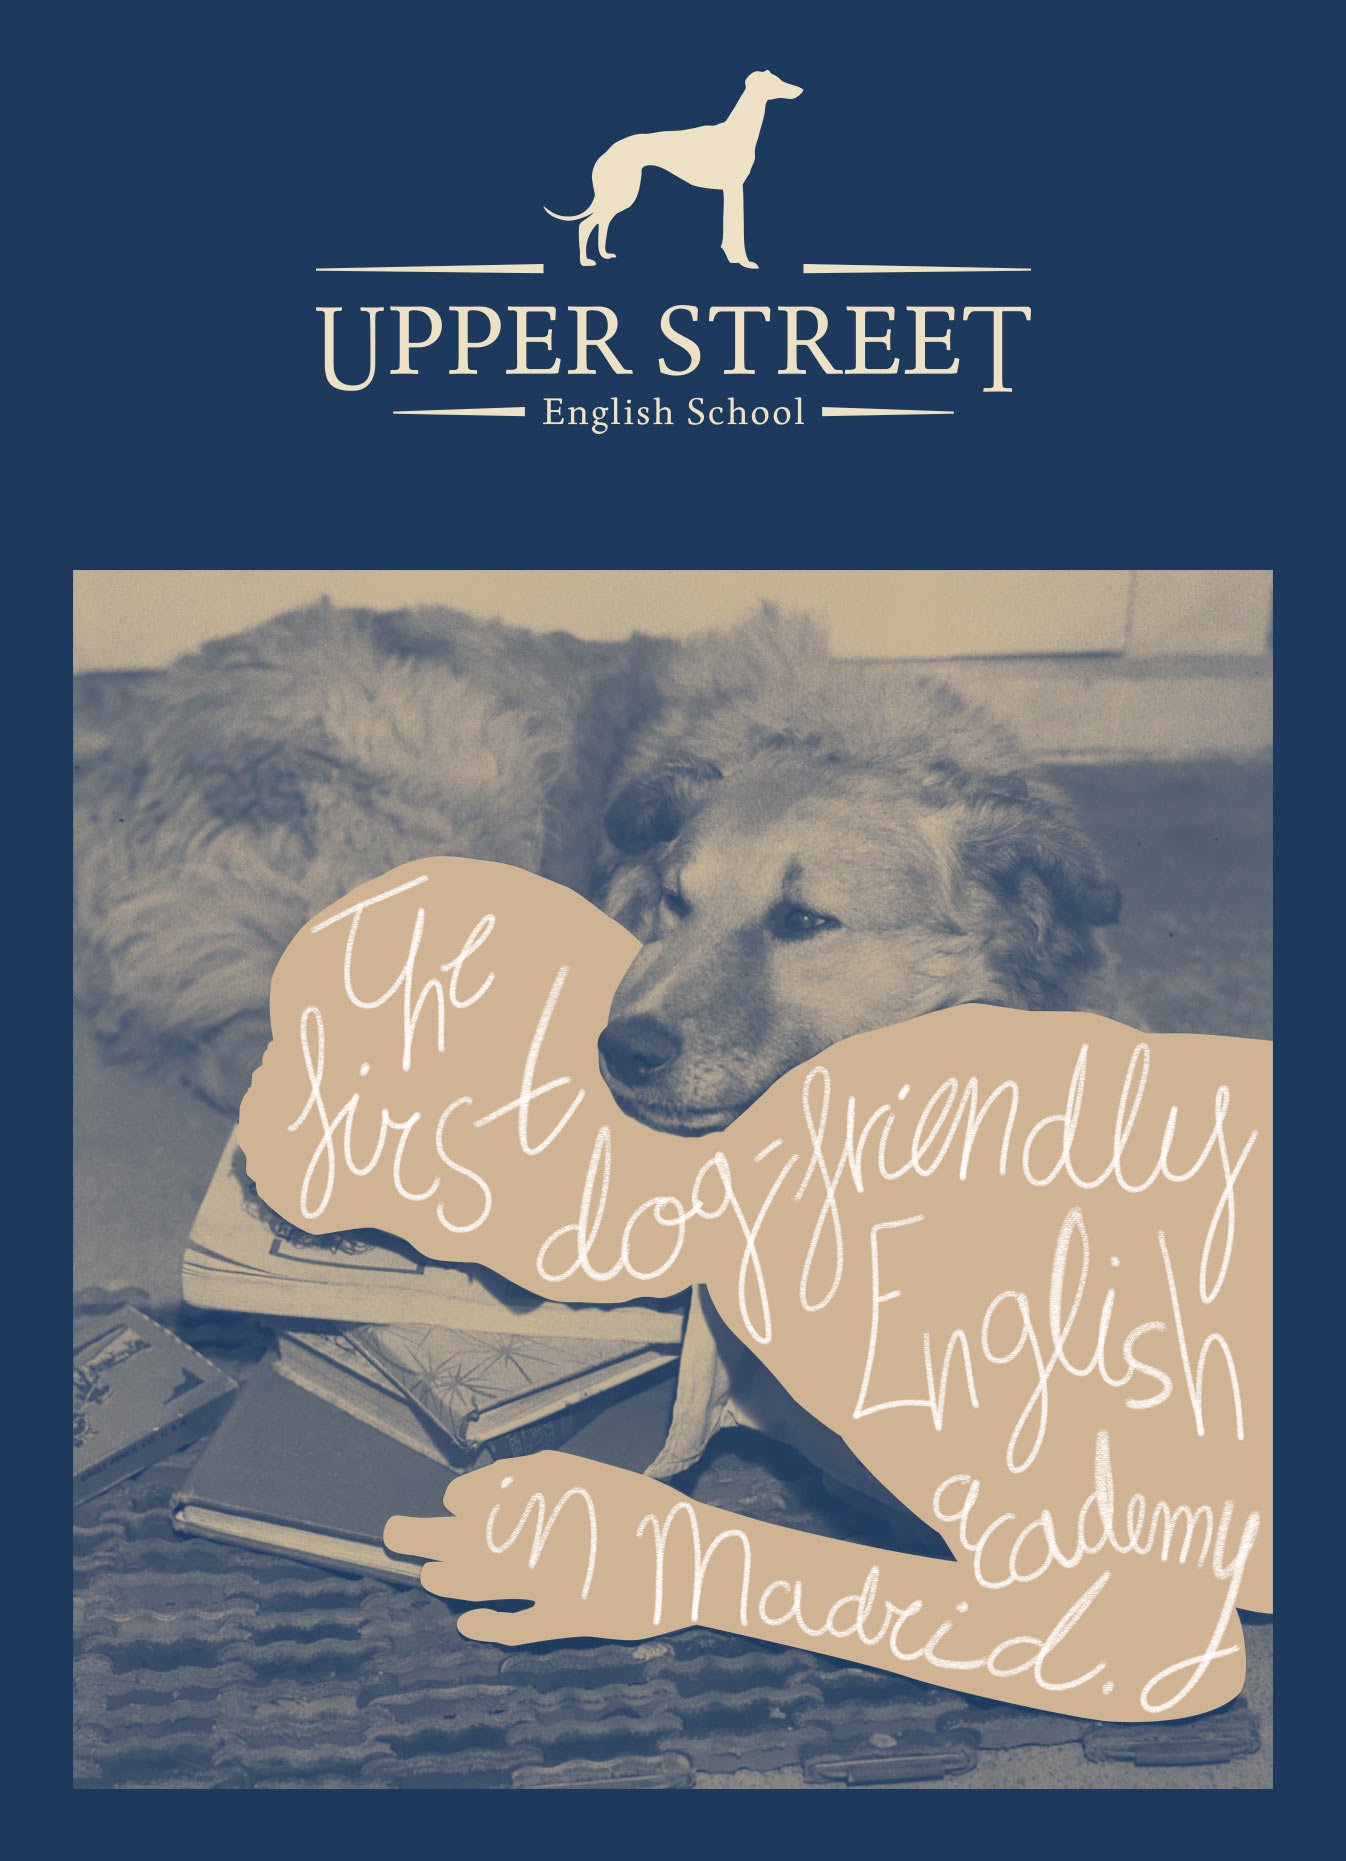 Upper Street dog-friendly